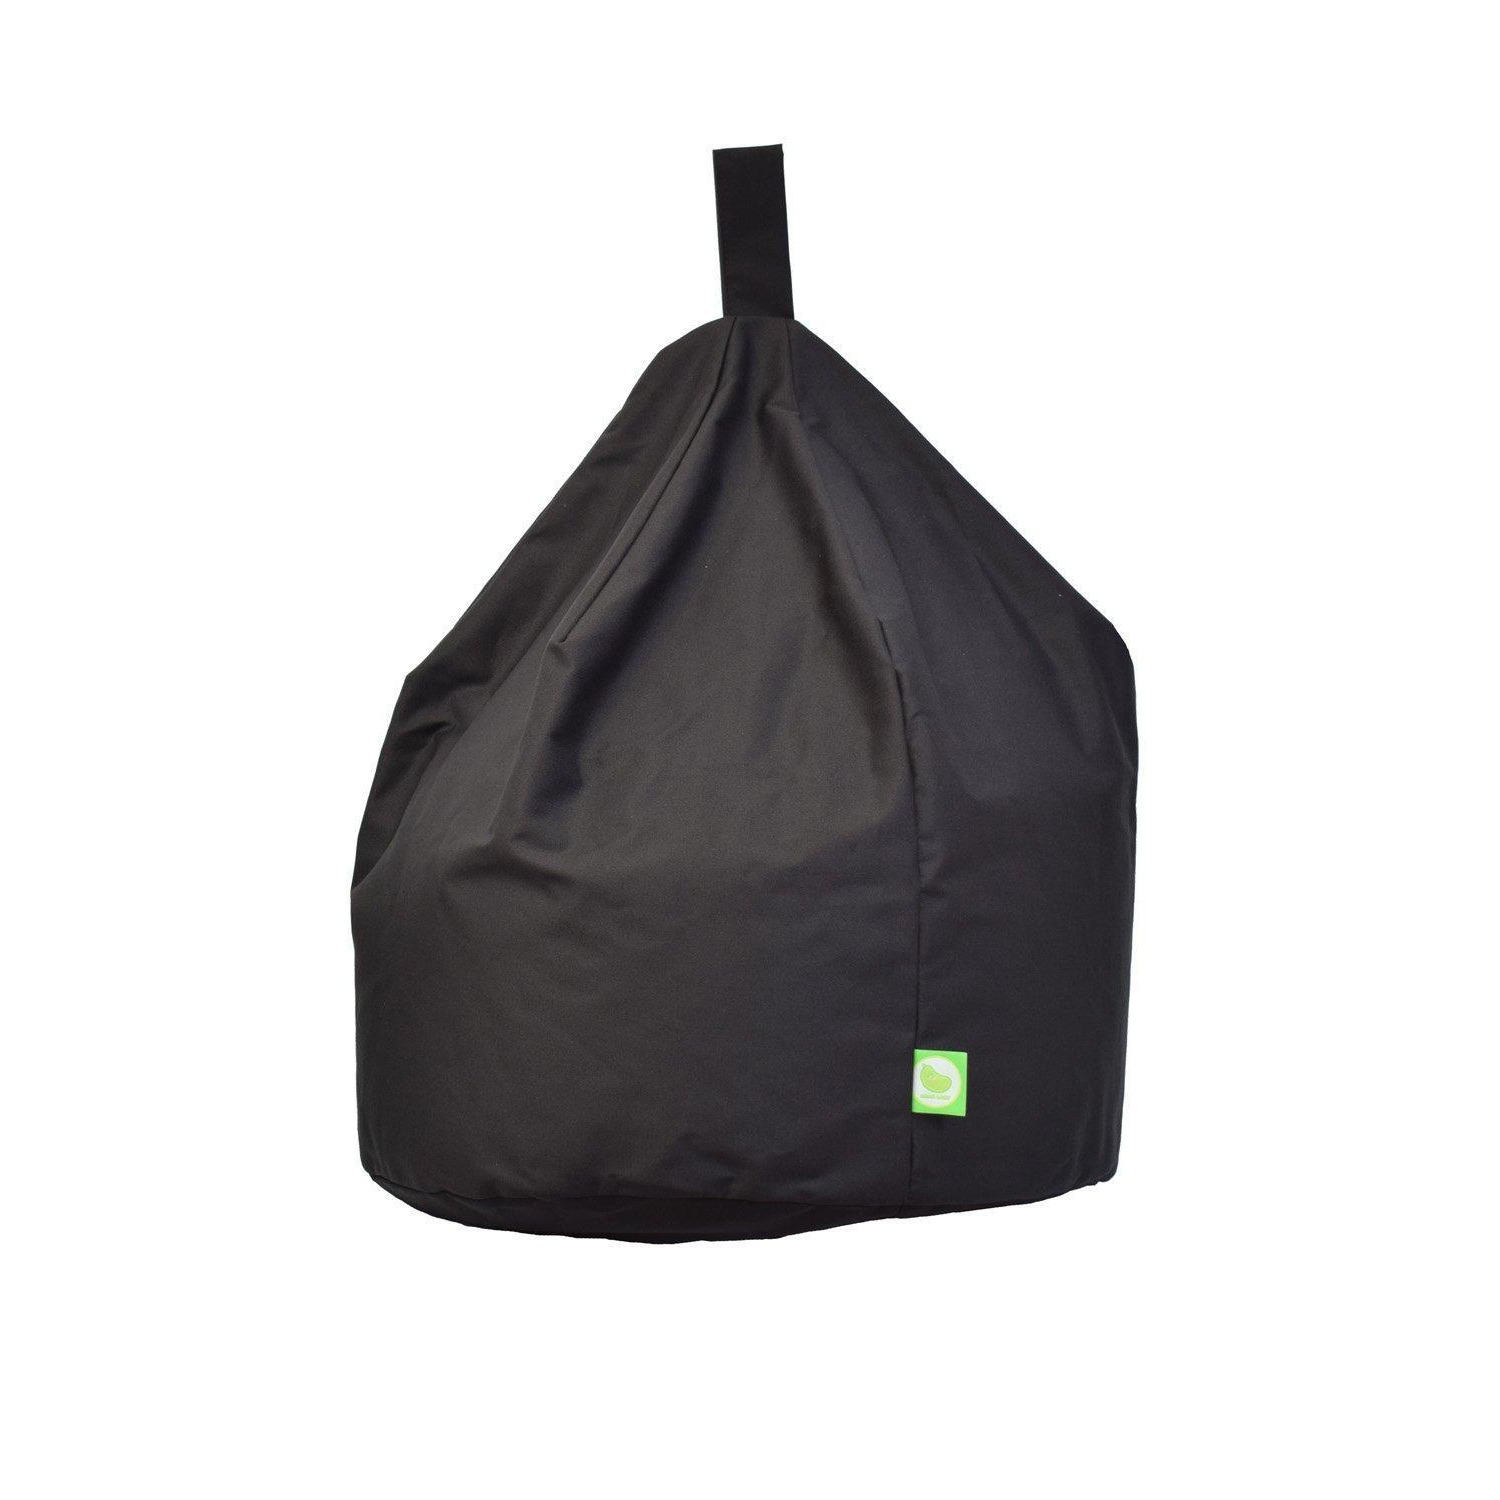 Cotton Twill Black Bean Bag Large Size - image 1